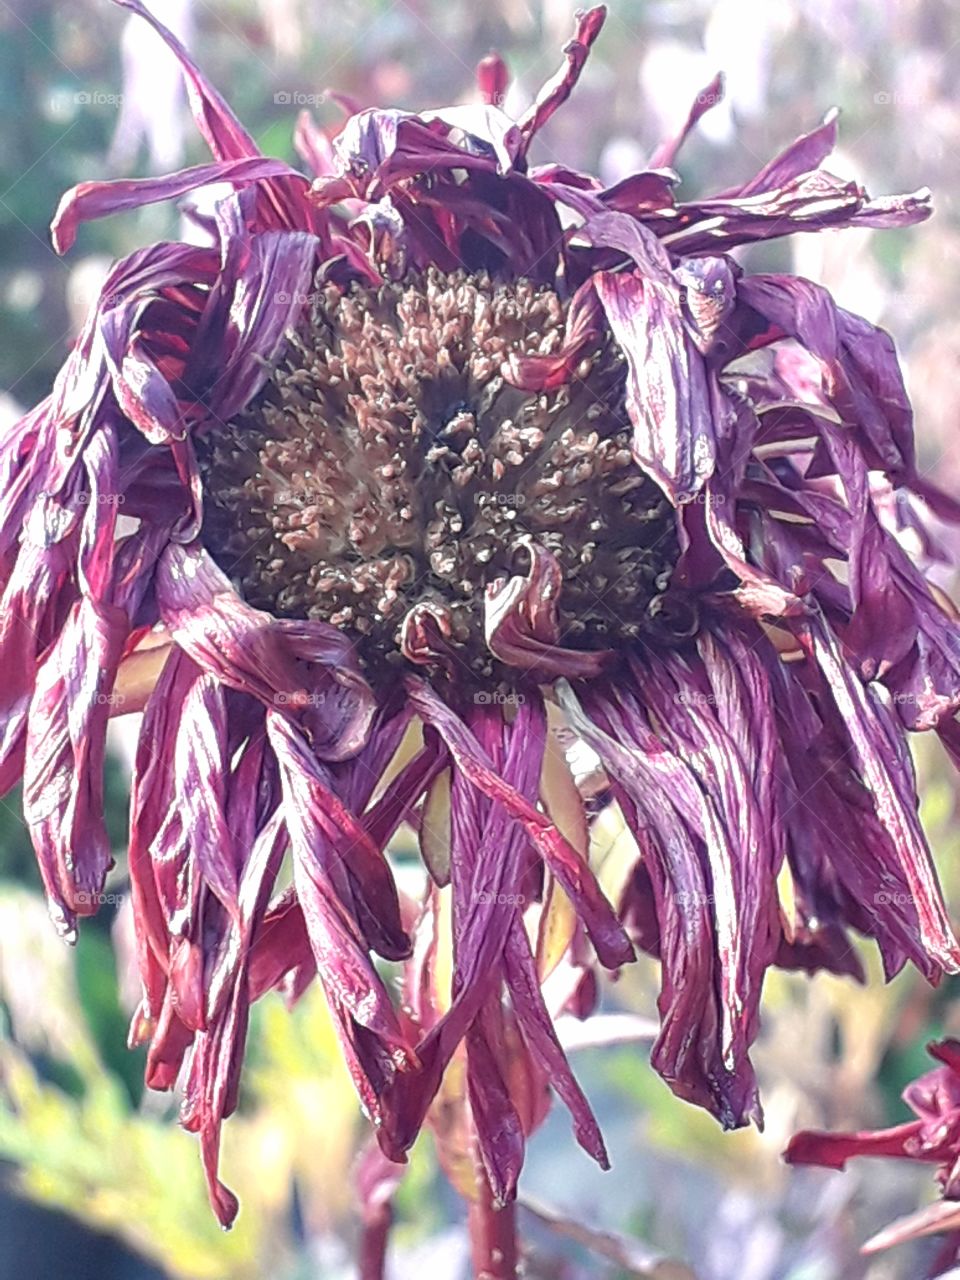 Dried flower